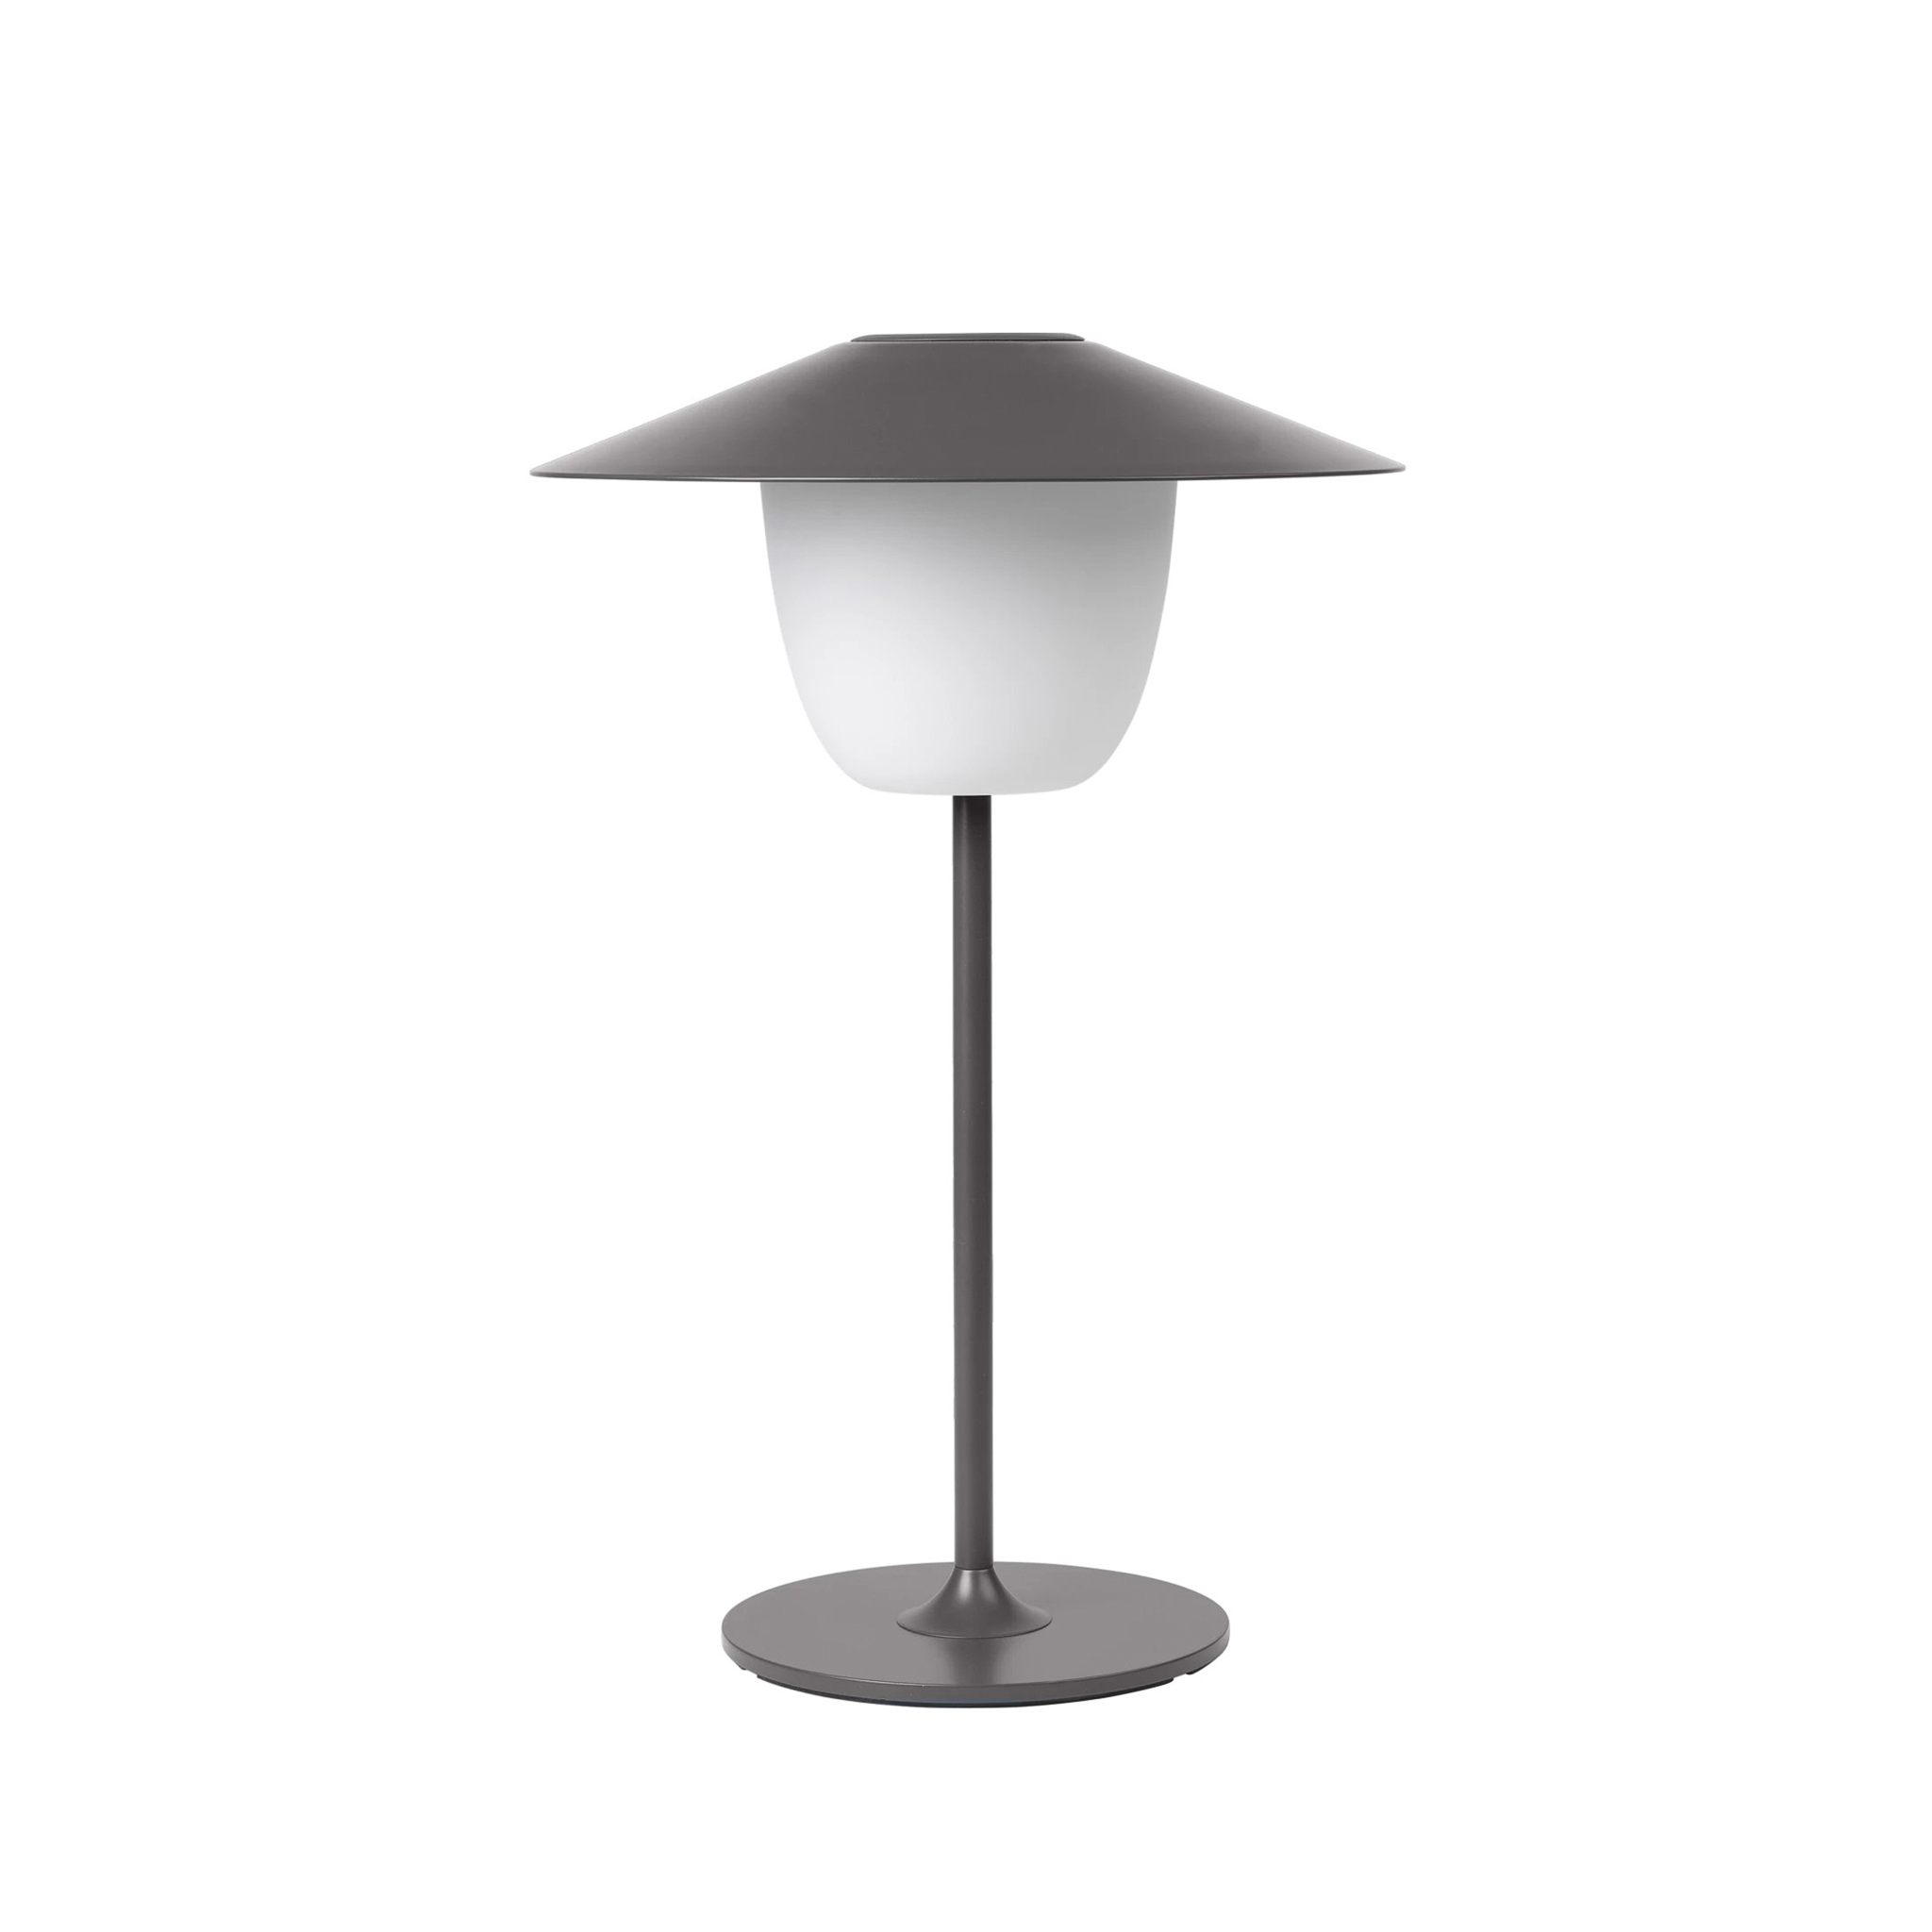 BLOMUS // ANI LAMP - MOBILE LED TABLE LAMP | WARM GRAY